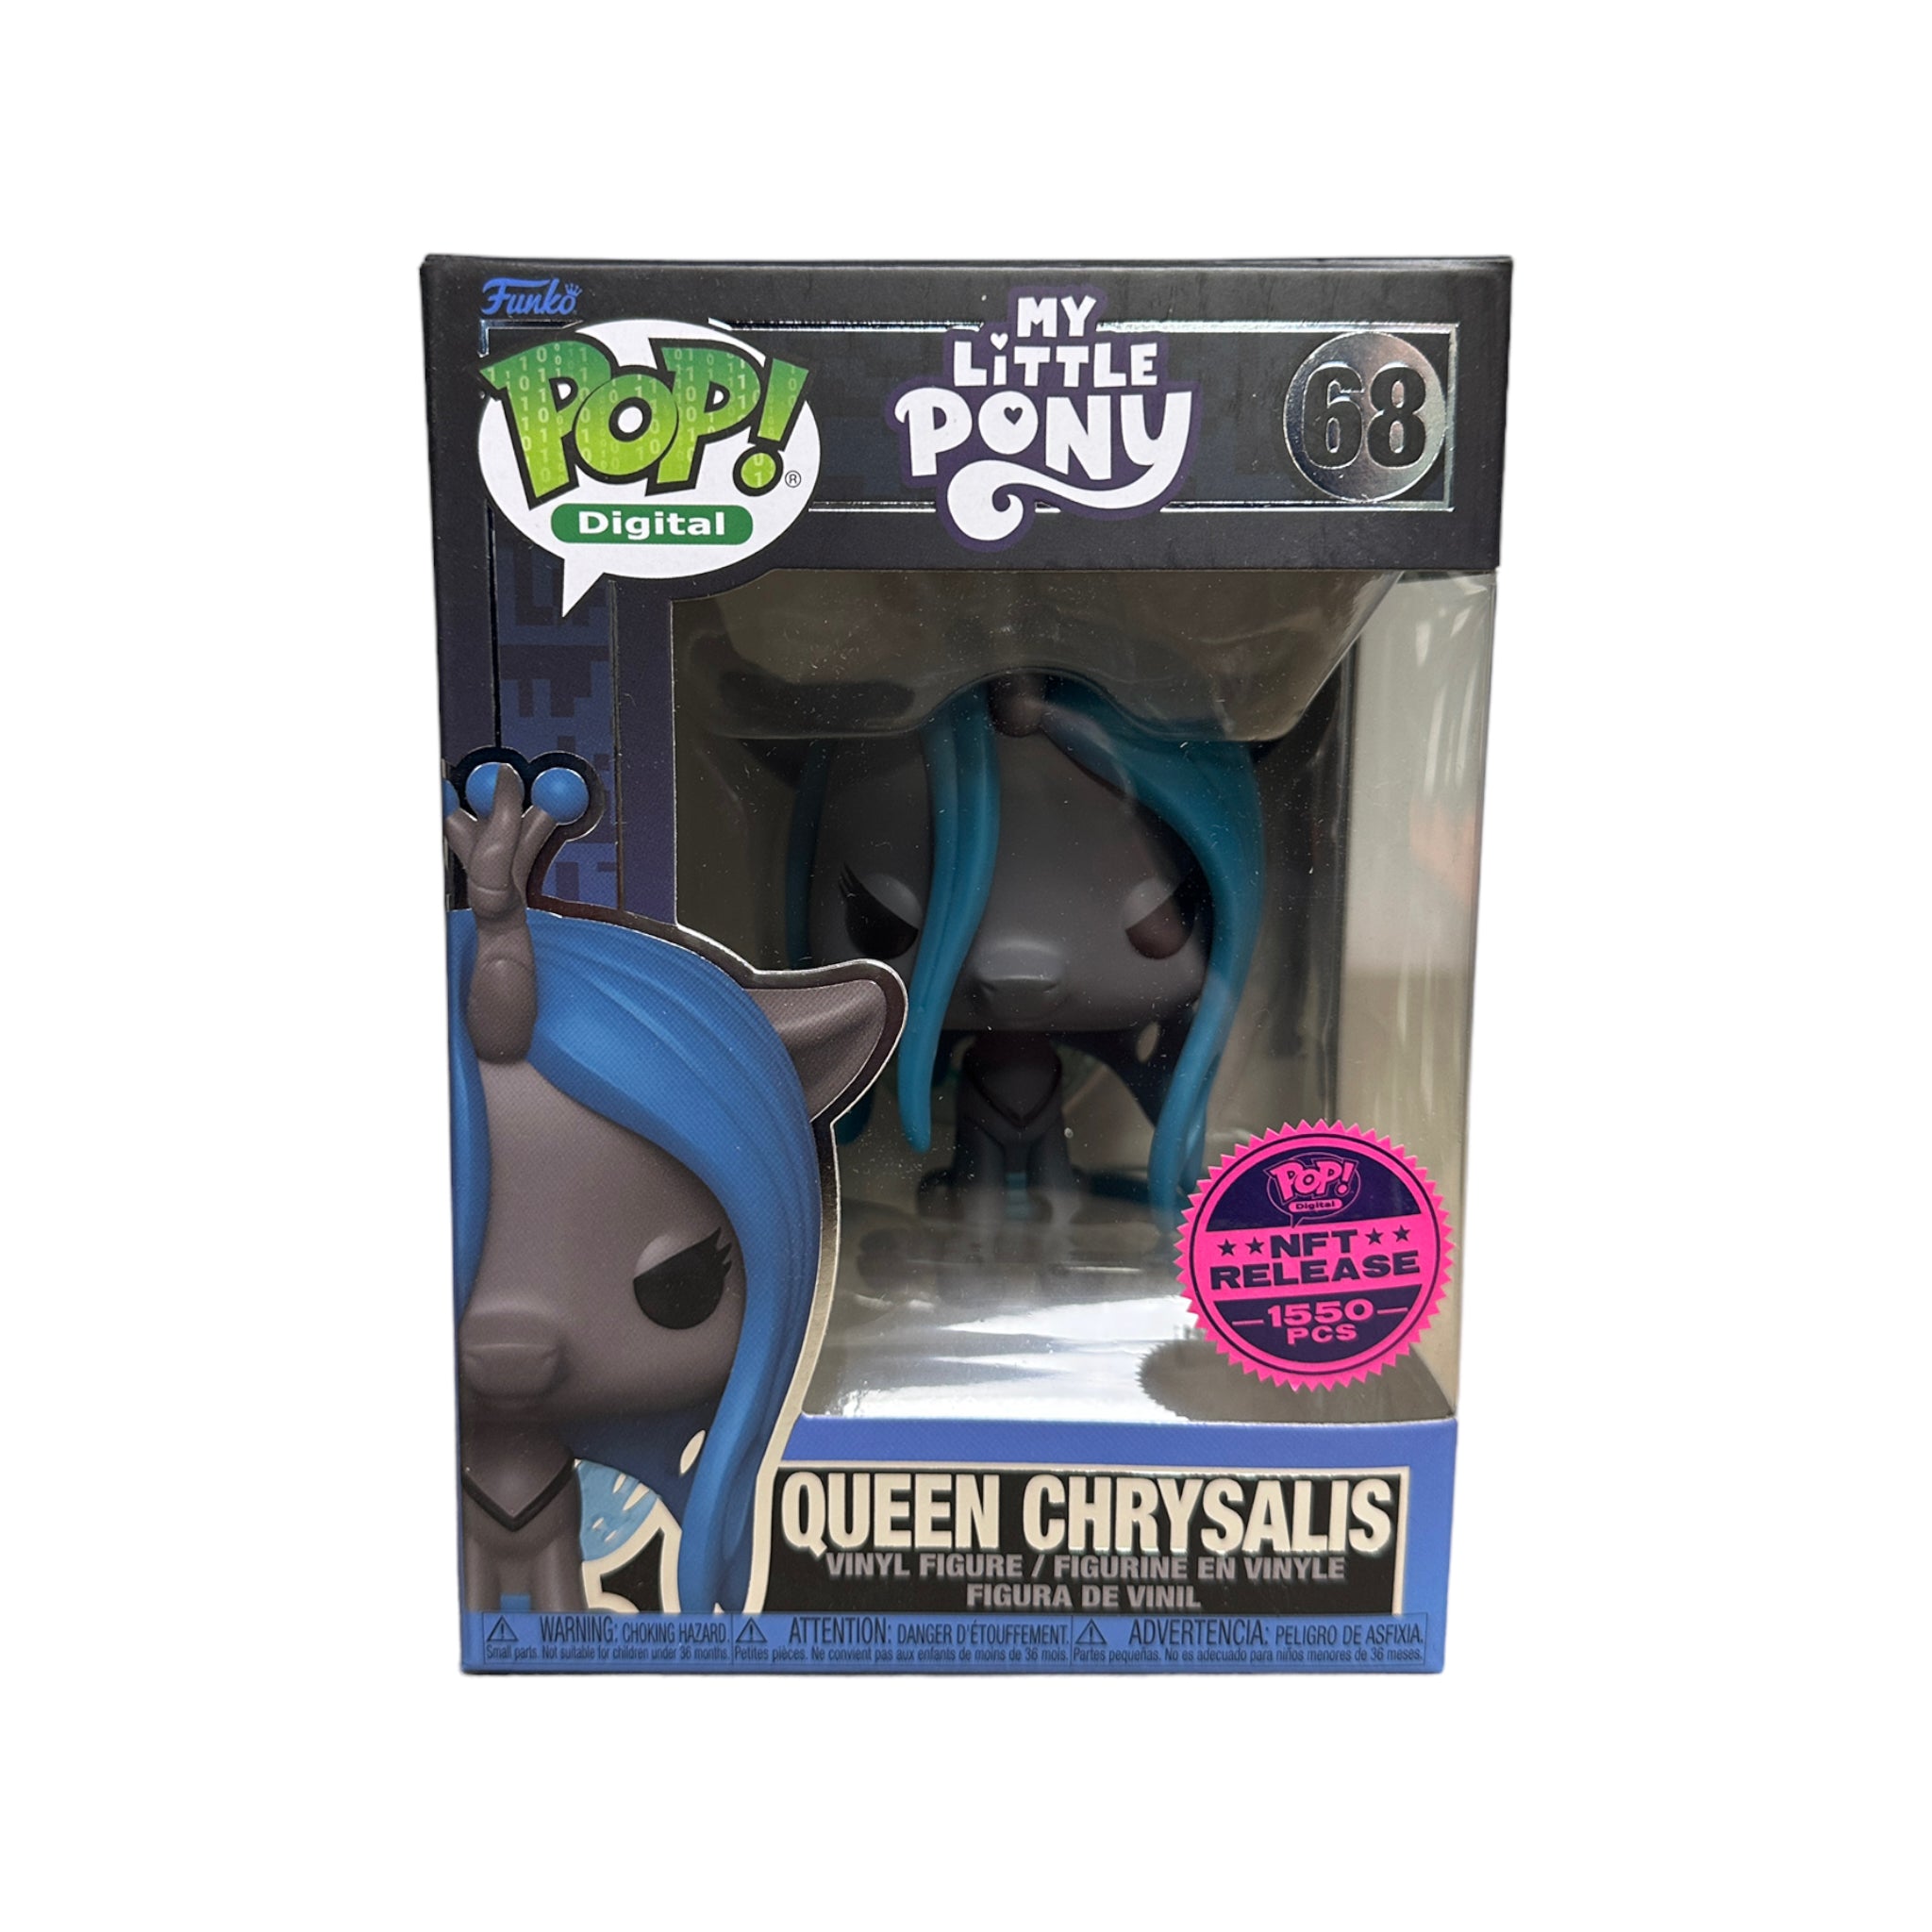 Queen Chrysalis #68 Funko Pop! - My Little Pony - NFT Release Exclusive LE1550 Pcs - Condition 8.5/10